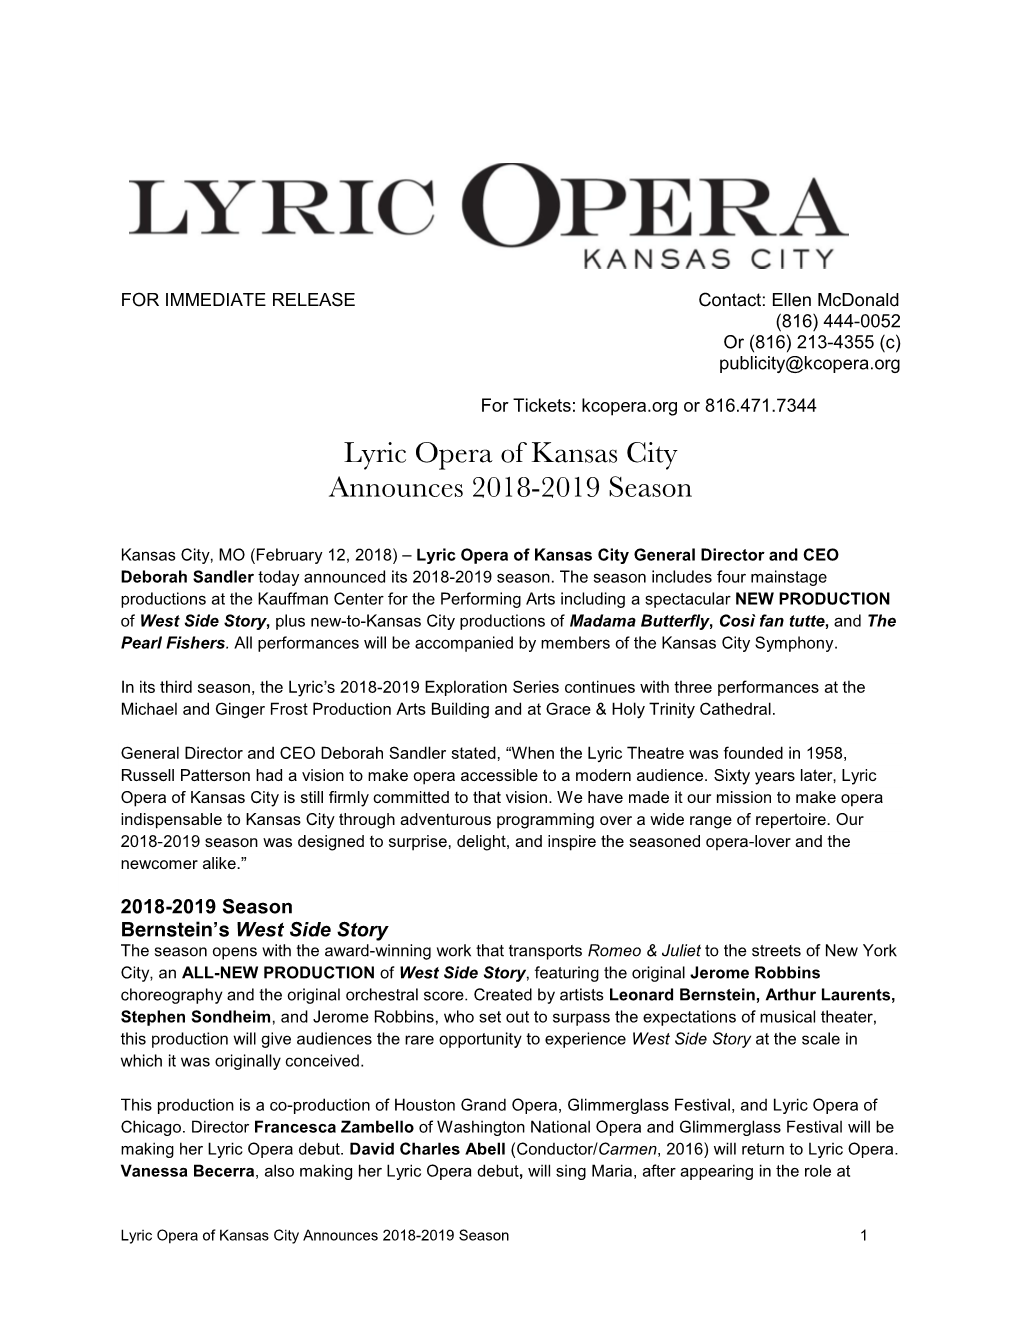 Lyric Opera of Kansas City Announces 2018-2019 Season